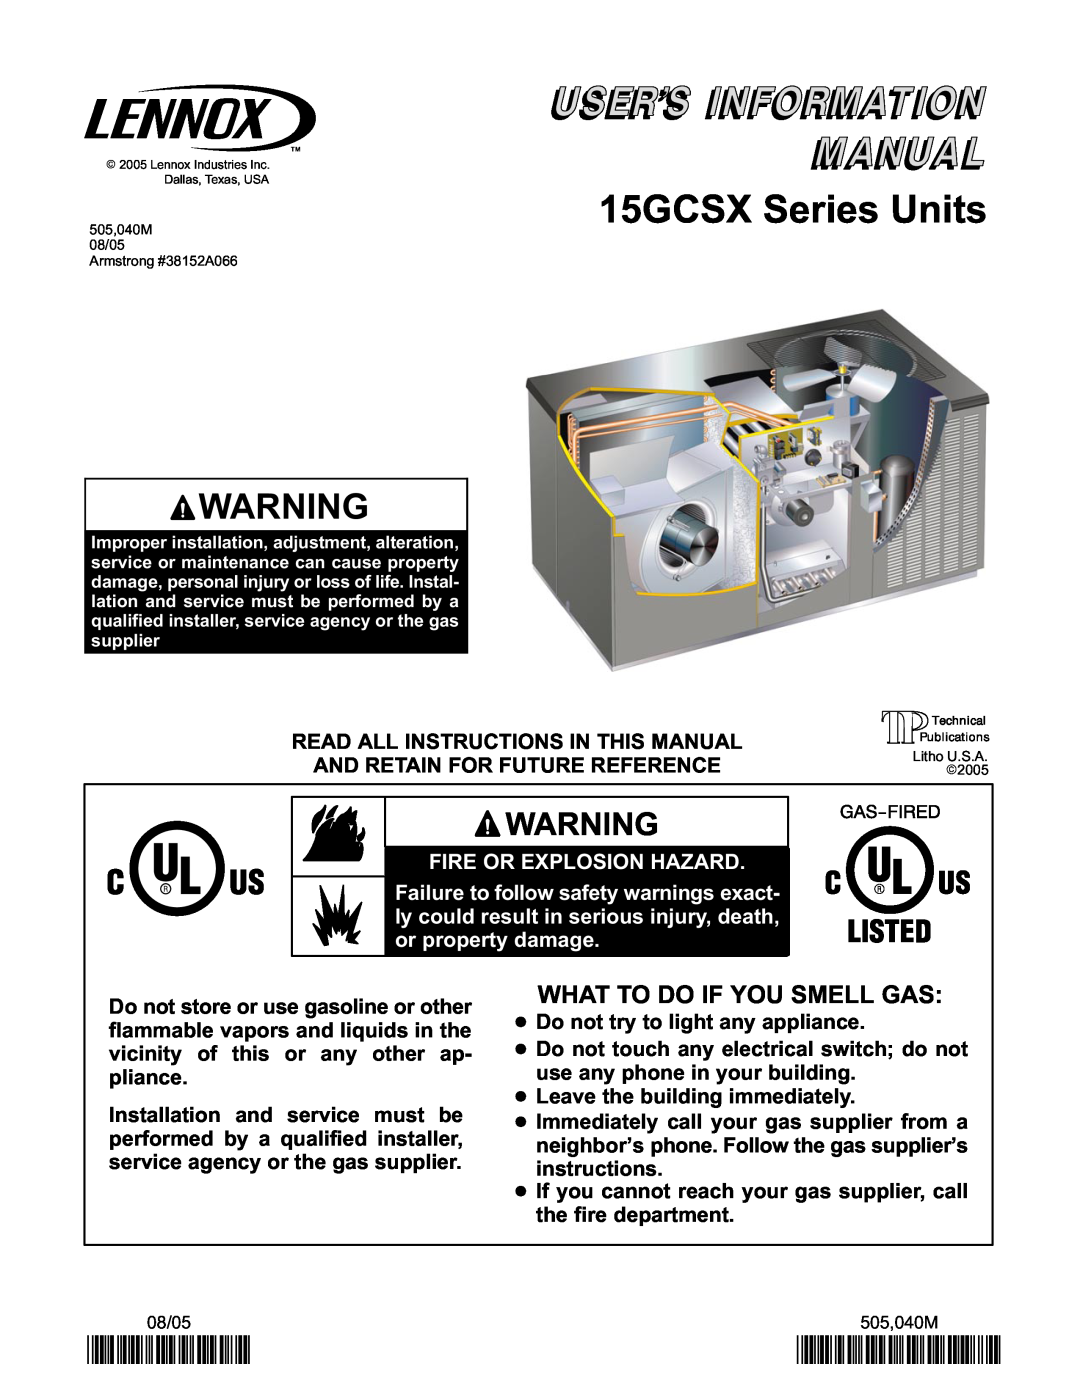 Lennox International Inc Lennox Unit manual 15GCSX Series Units, 2P0805, P505040M, What To Do If You Smell Gas 